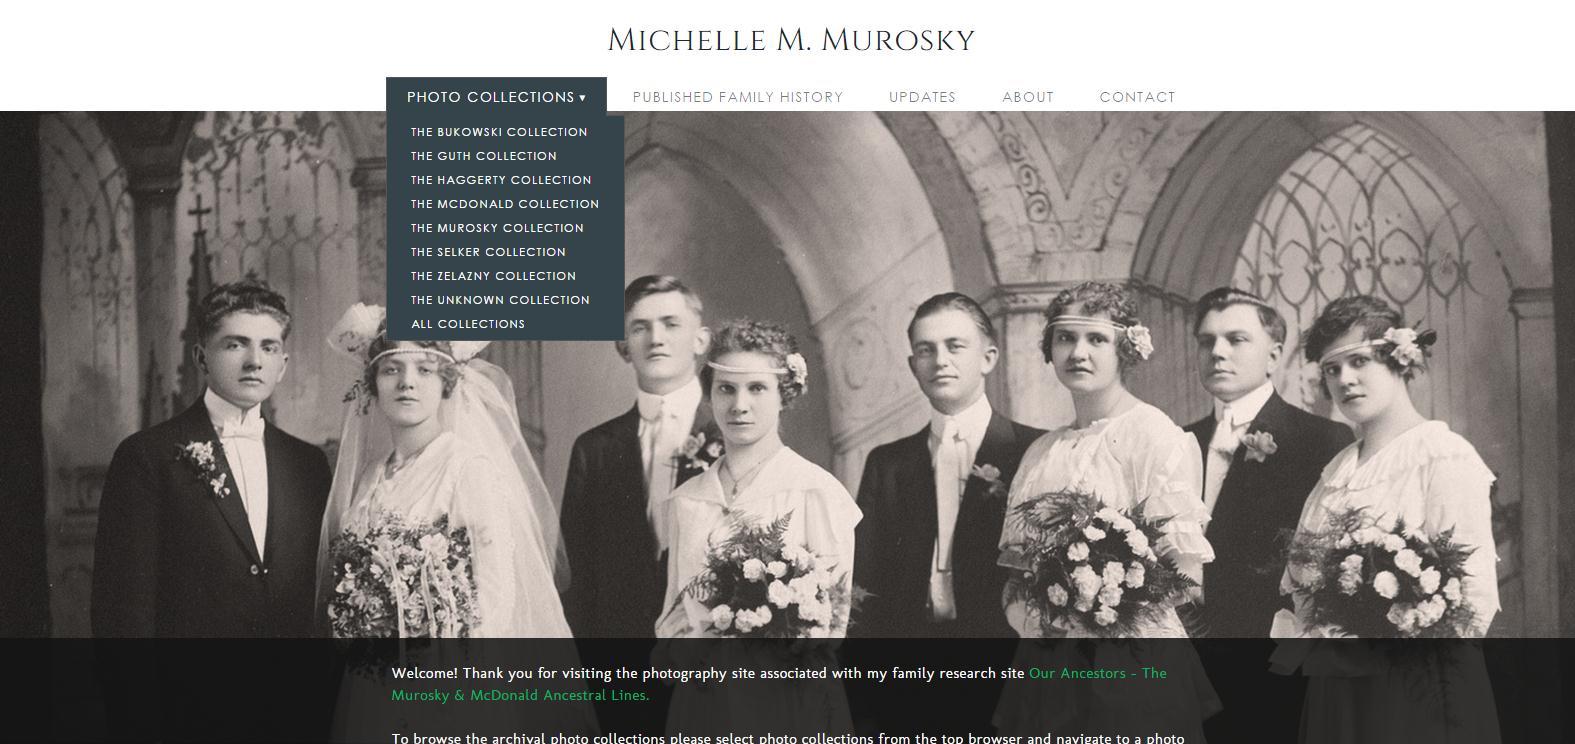 Michelle M. Murosky: Blog Images &emdash; Navigation Menus